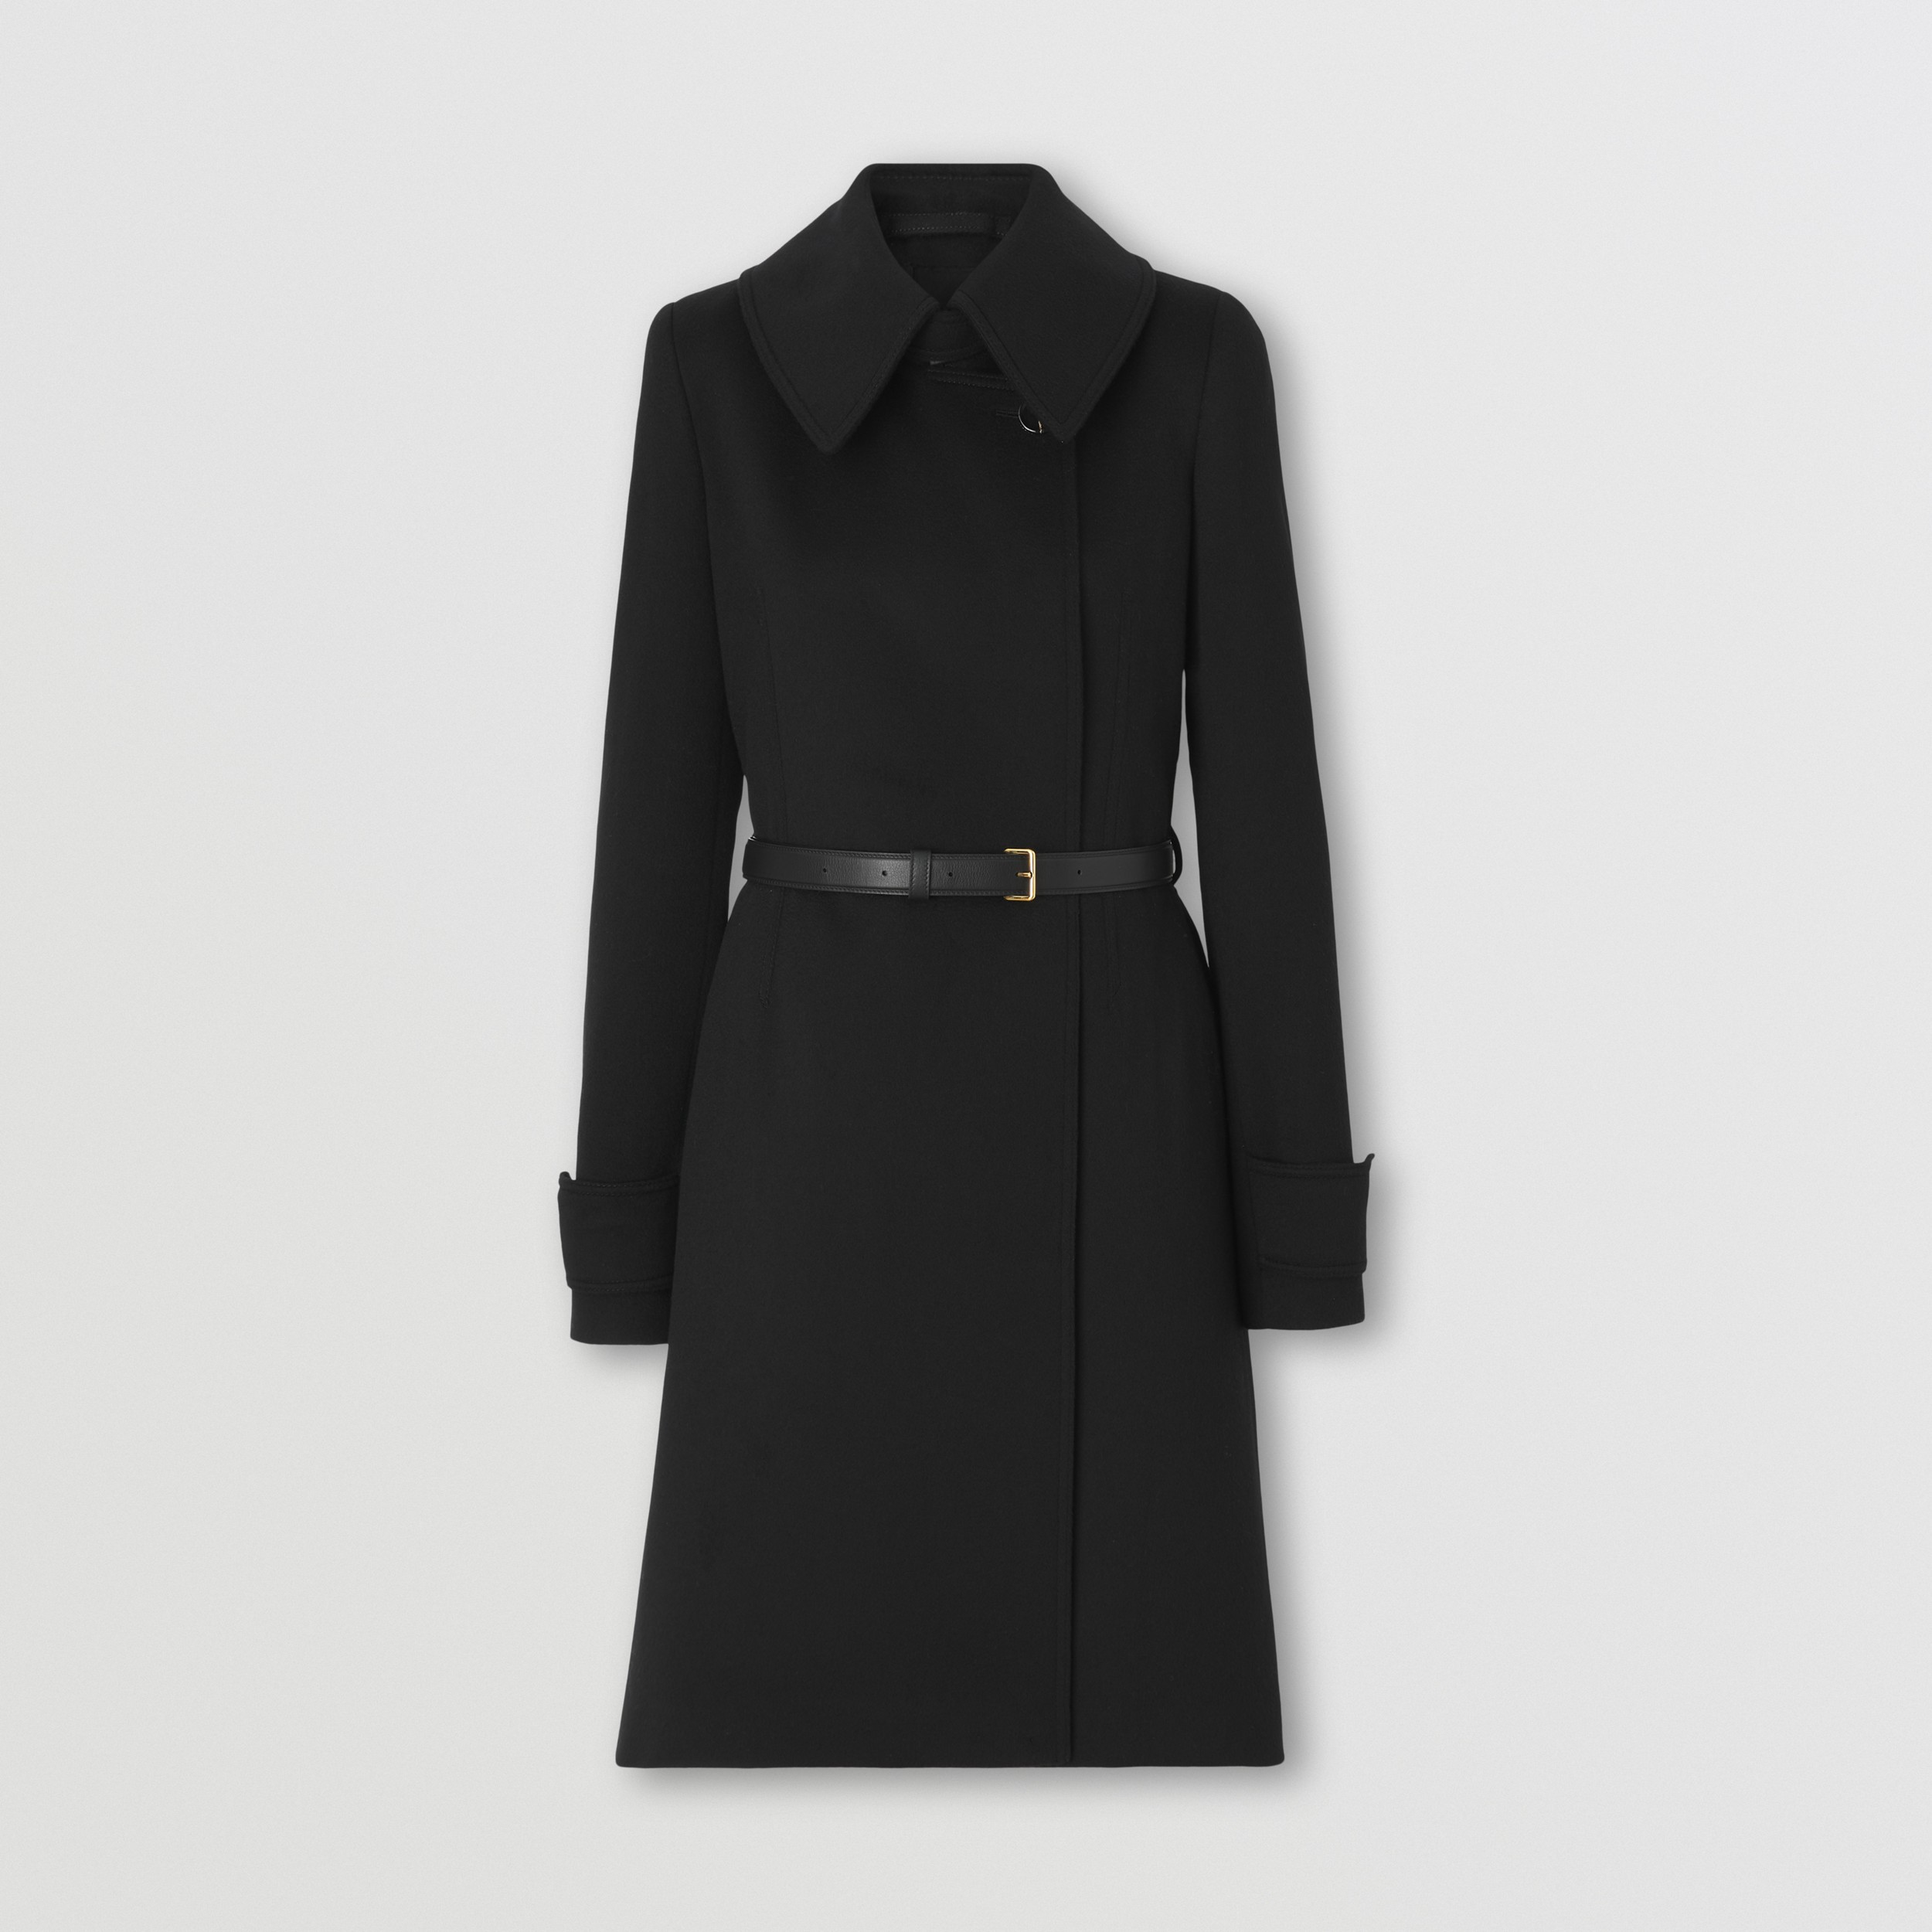 Mantel aus recyceltem Kaschmir mit Gürtel (Schwarz) - Damen | Burberry® - 4